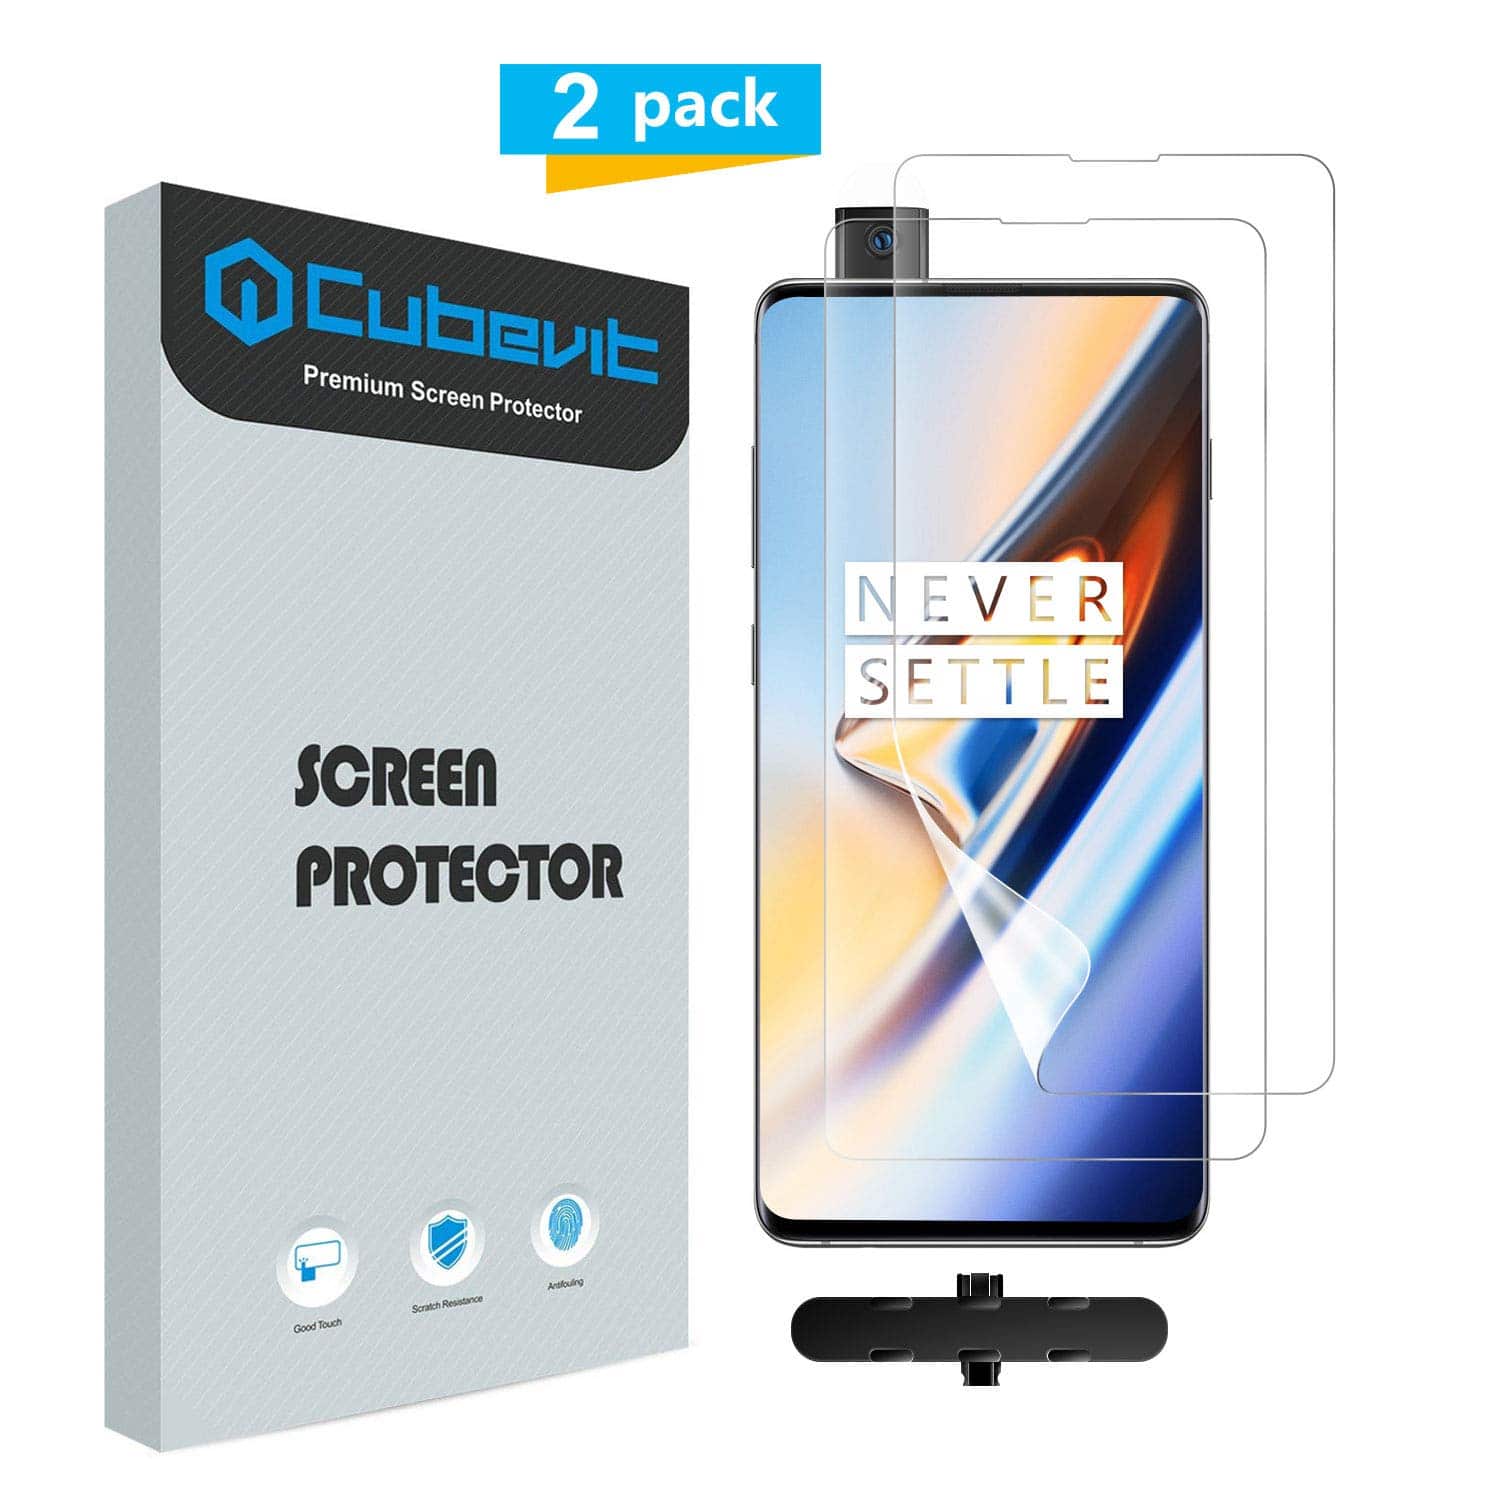 Cubevit Best OnePlus 7 Pro Screen Protectors